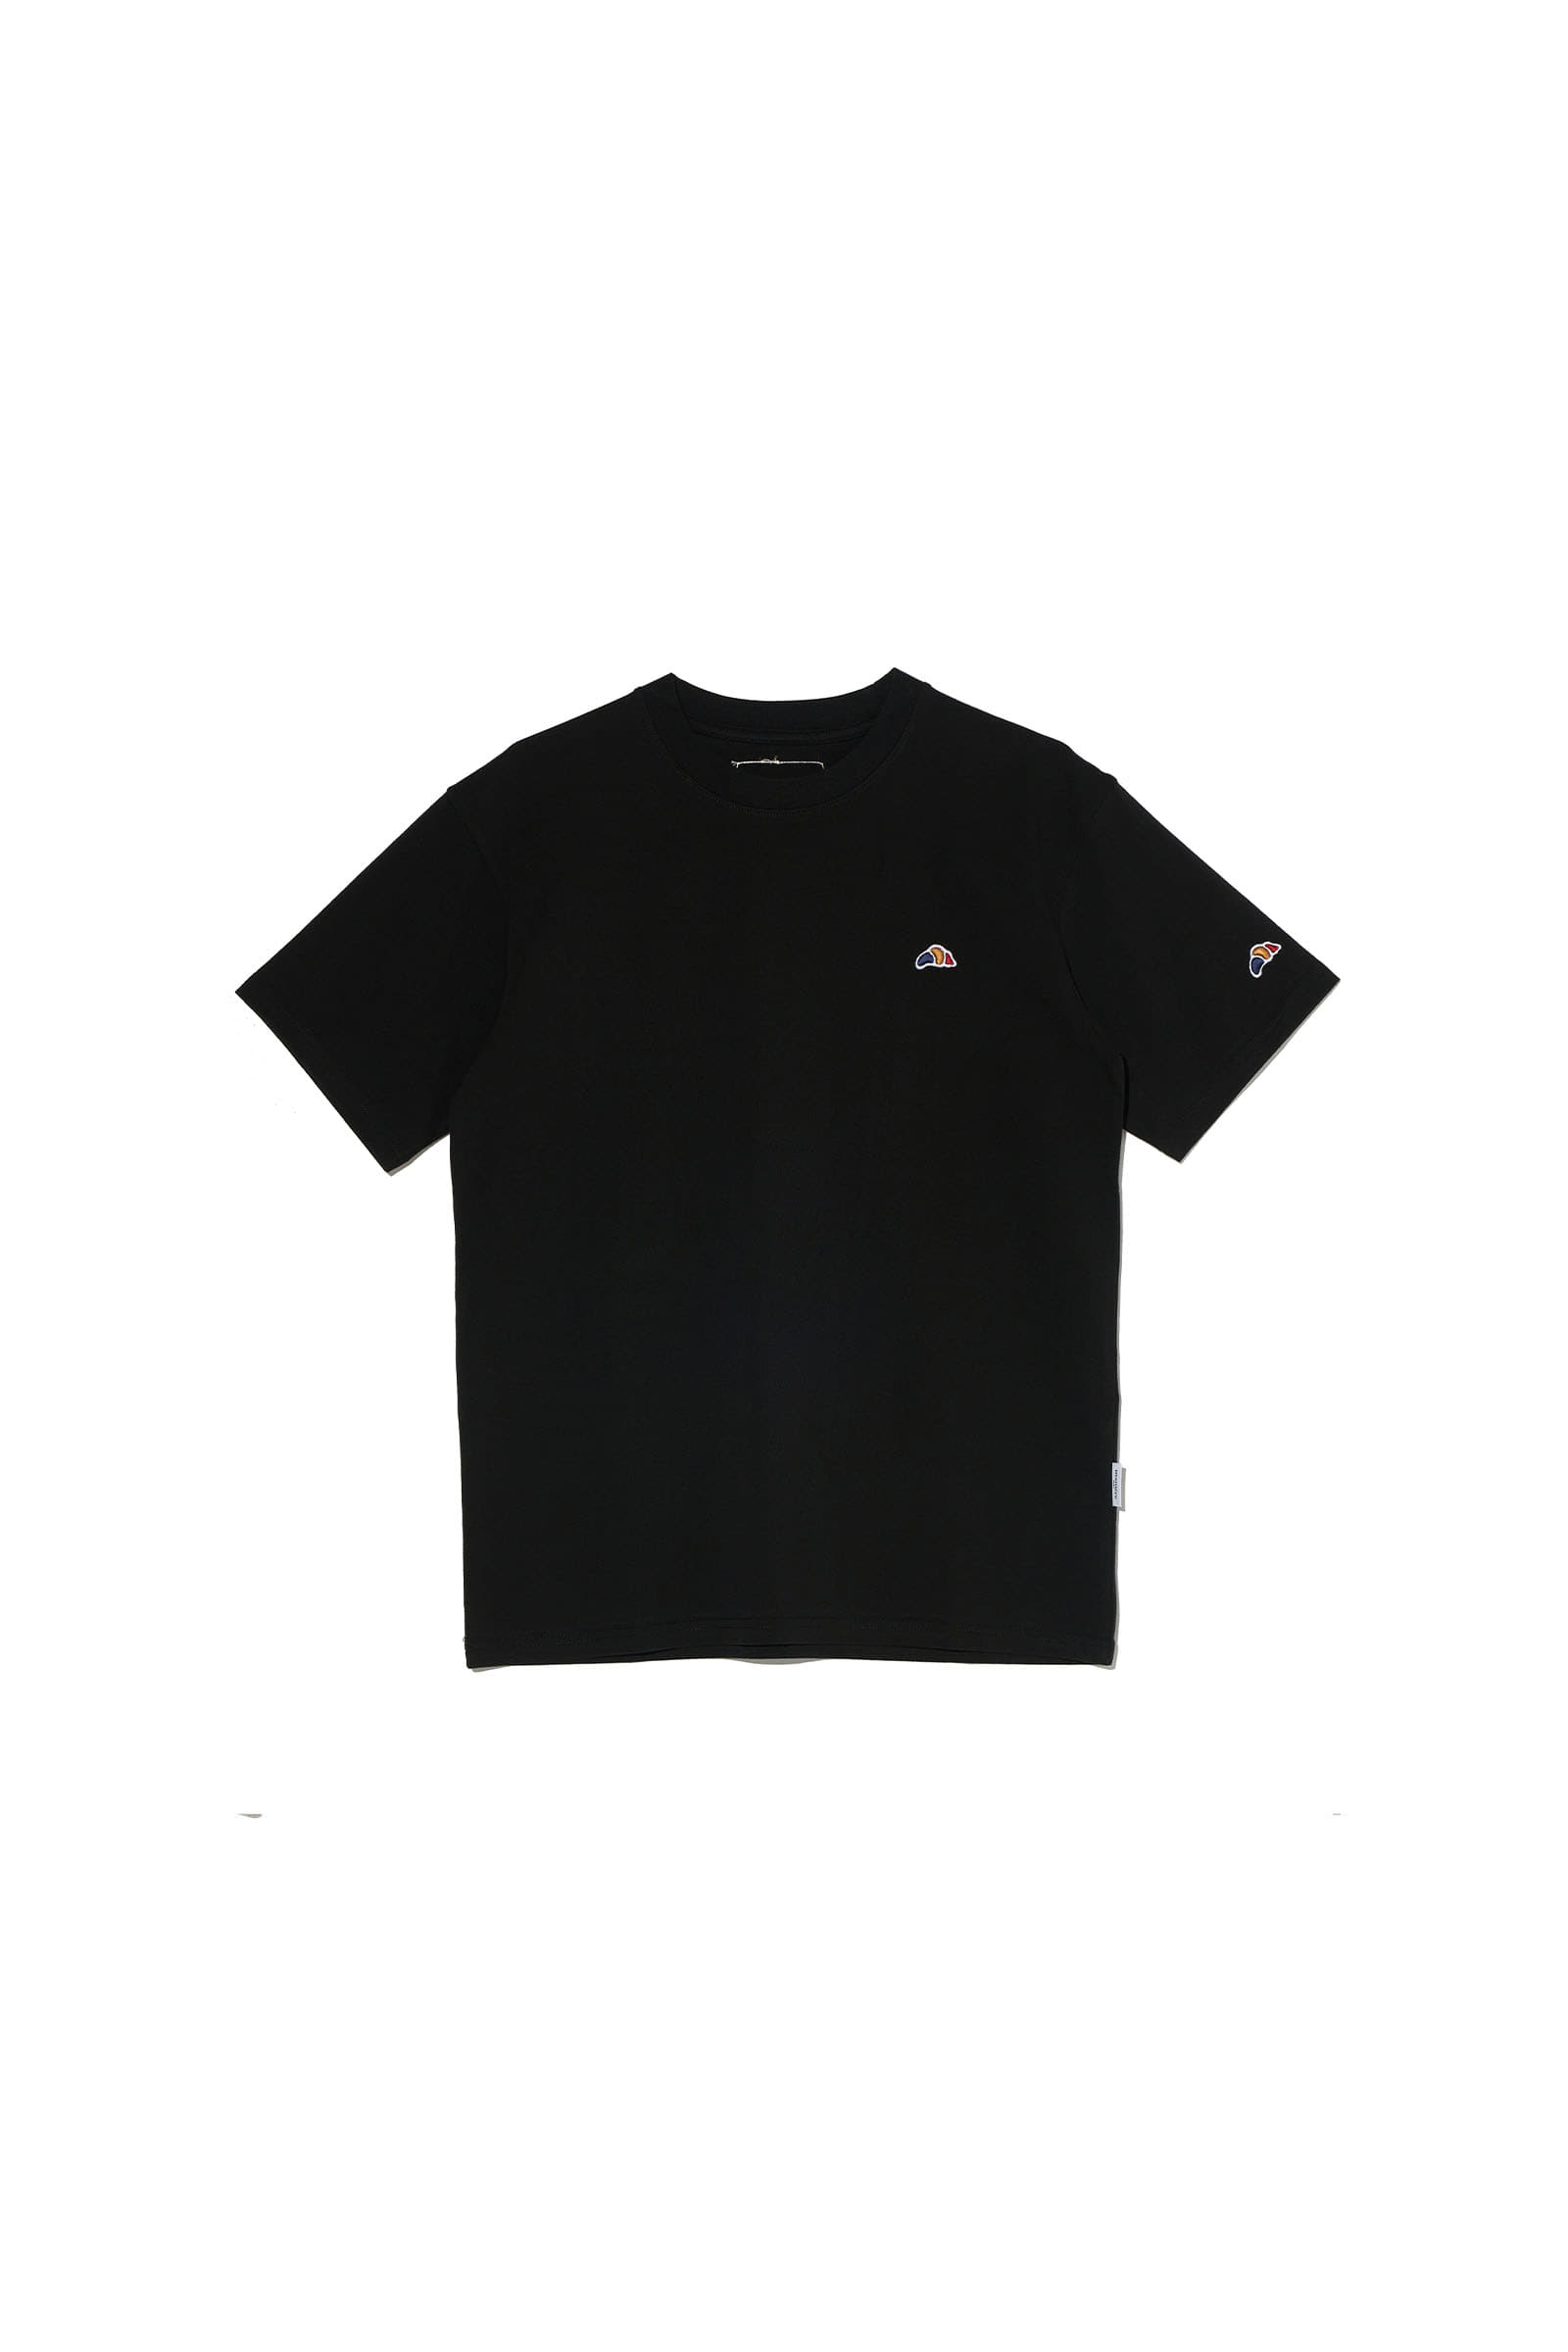 ep.6 Croissant symbol T-shirts (Black)